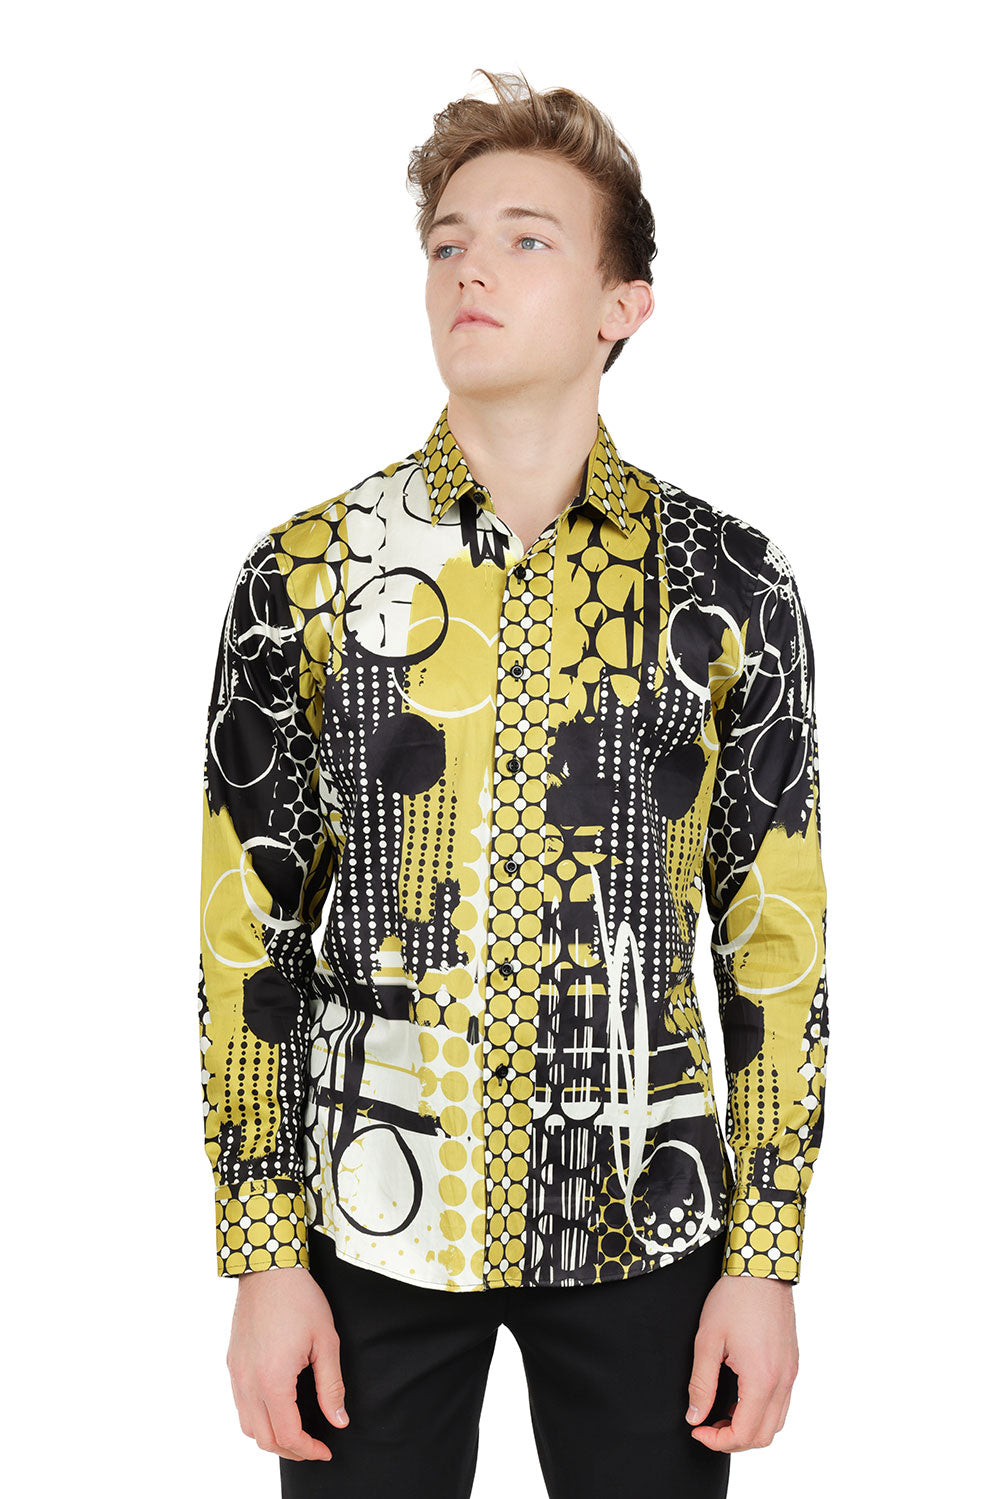 Barabas Men's Oval Geo Prints Design Luxury Button Down Shirt SP17 Gold